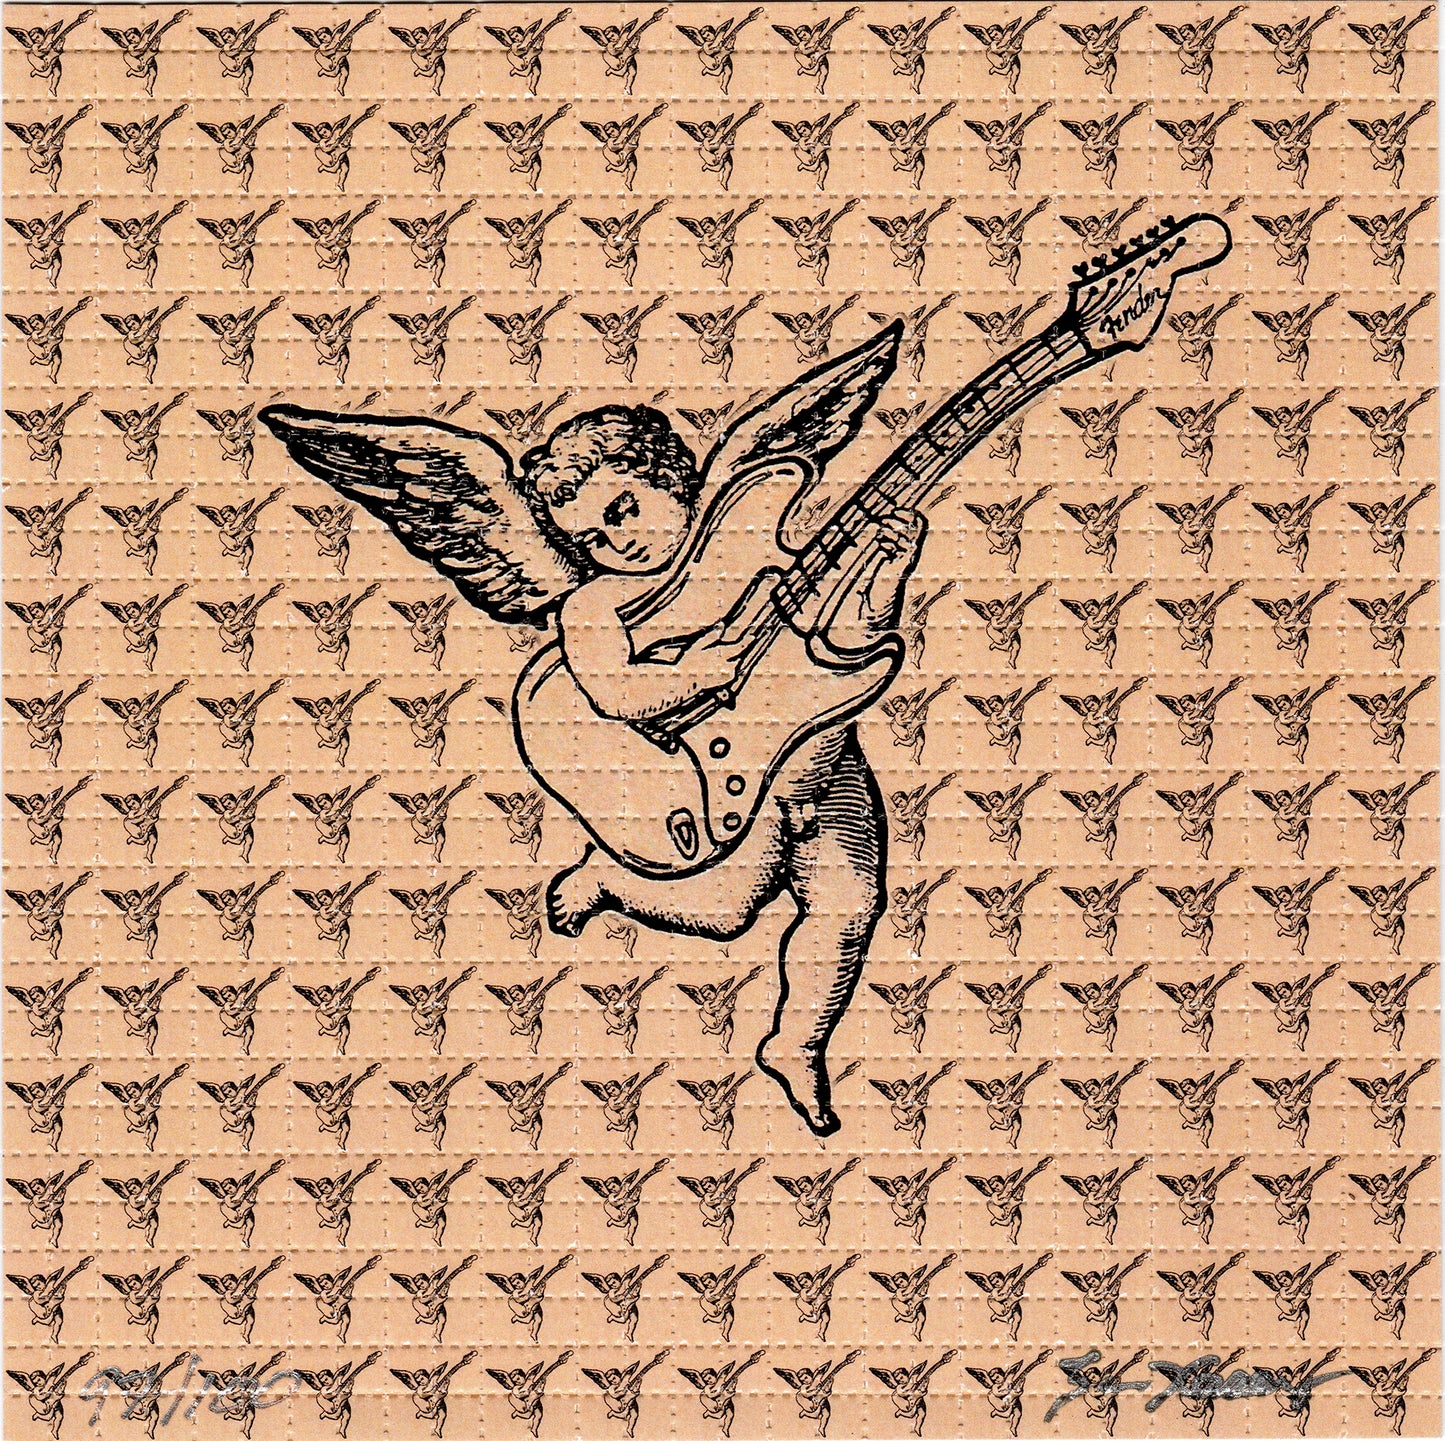 Festi Cherub by Ken Kesey by Signed by Zane Kesey Limited Edition LSD blotter art print